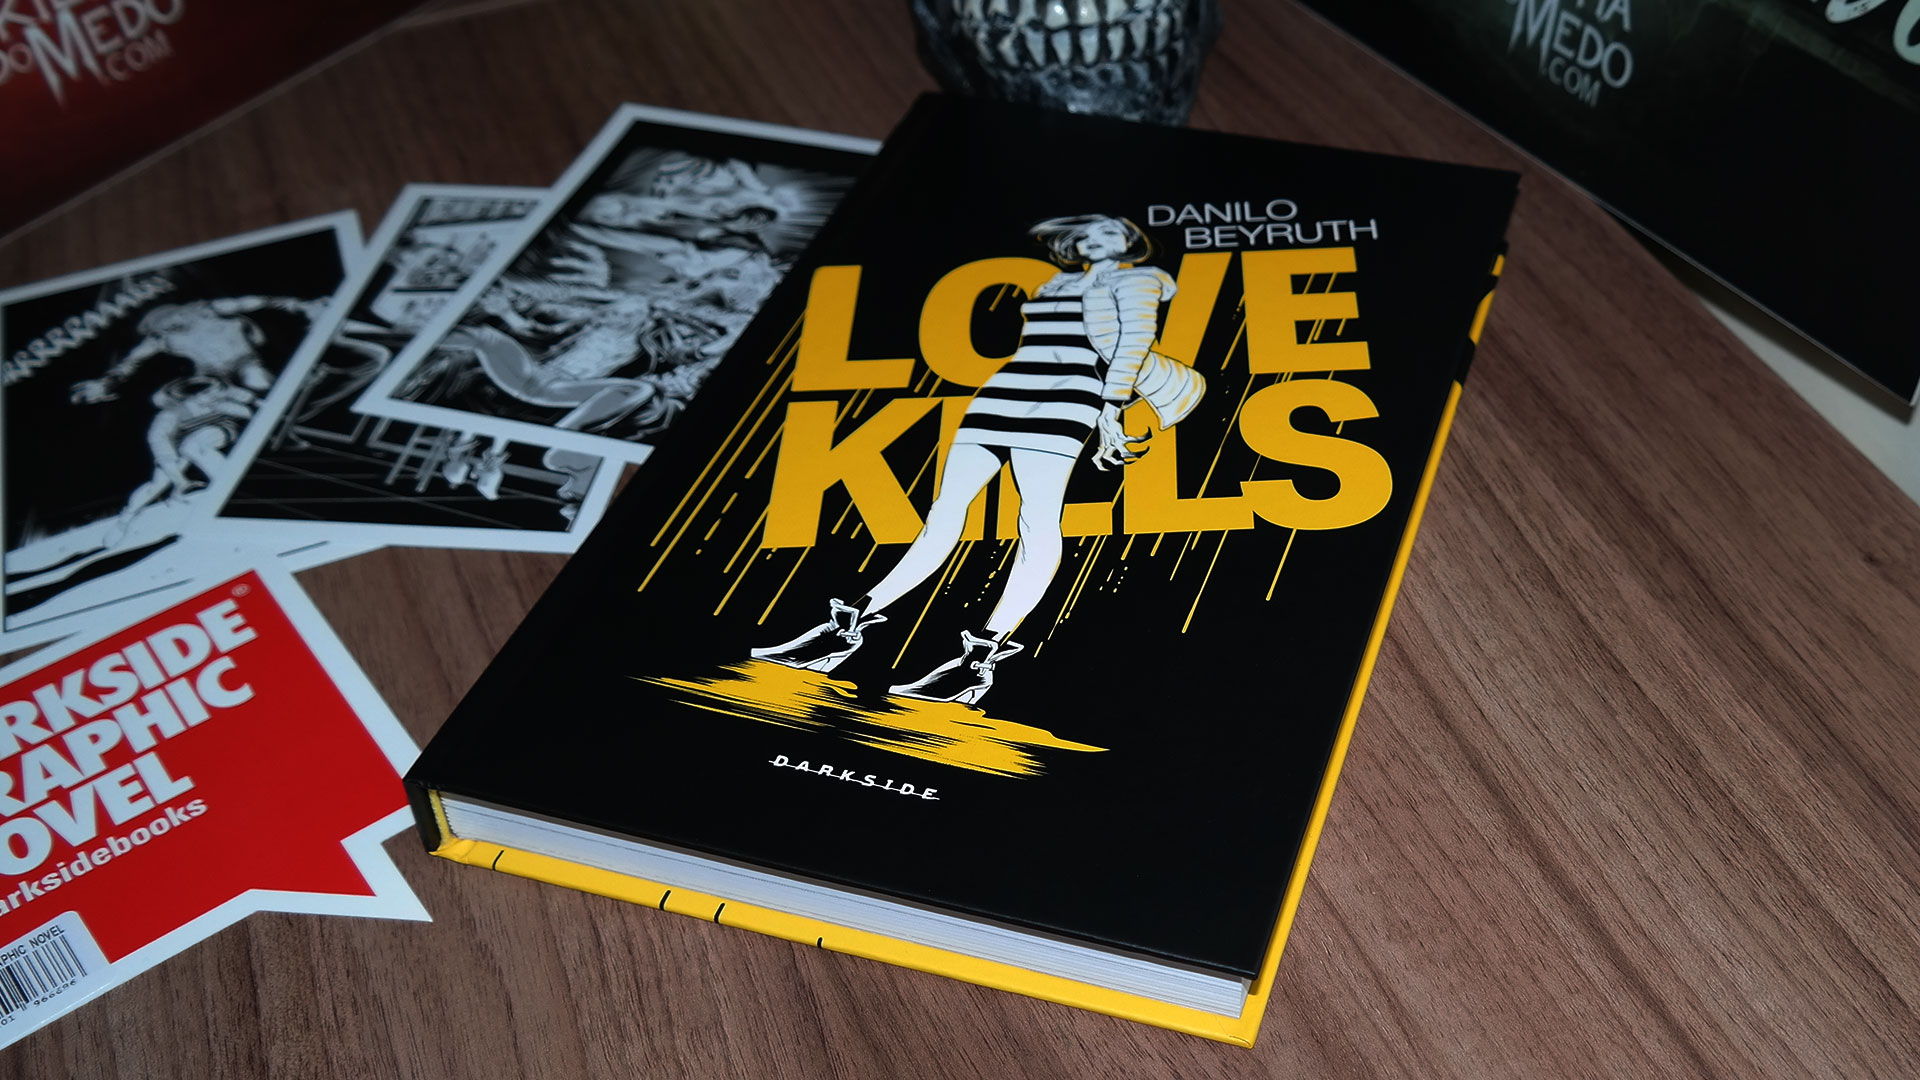 love-kills